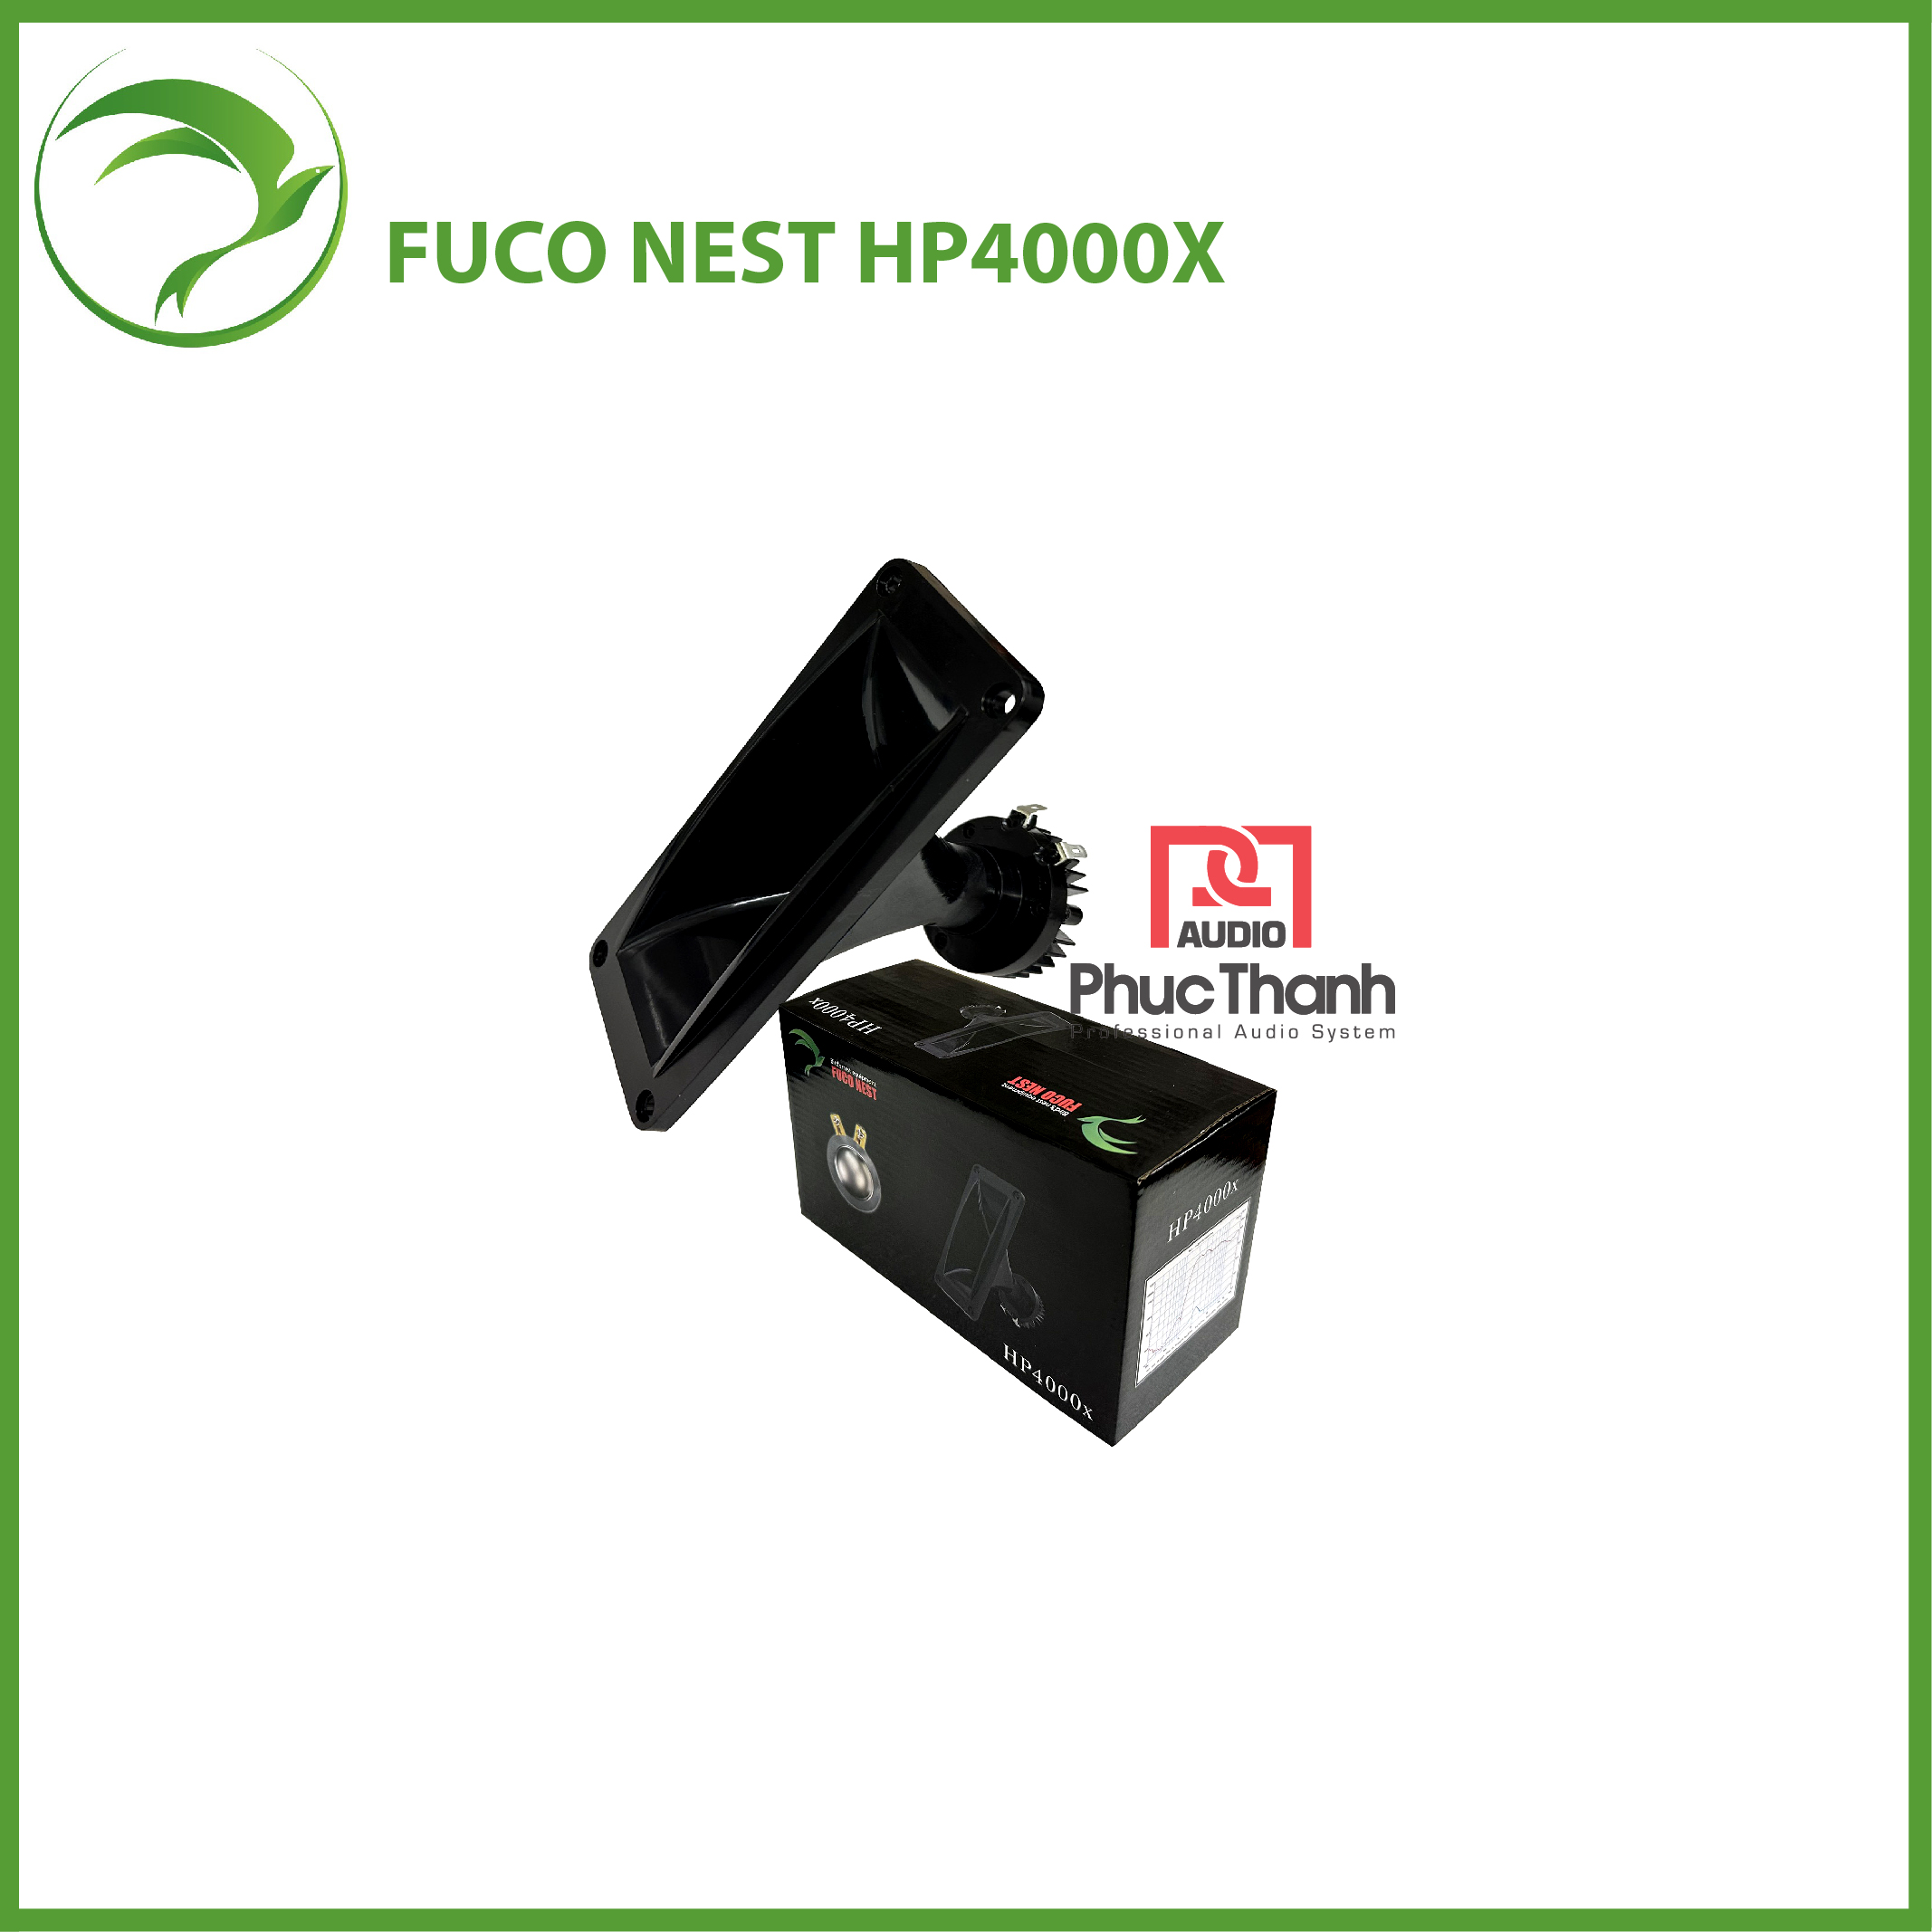 Loa Fuco Nest HP4000X